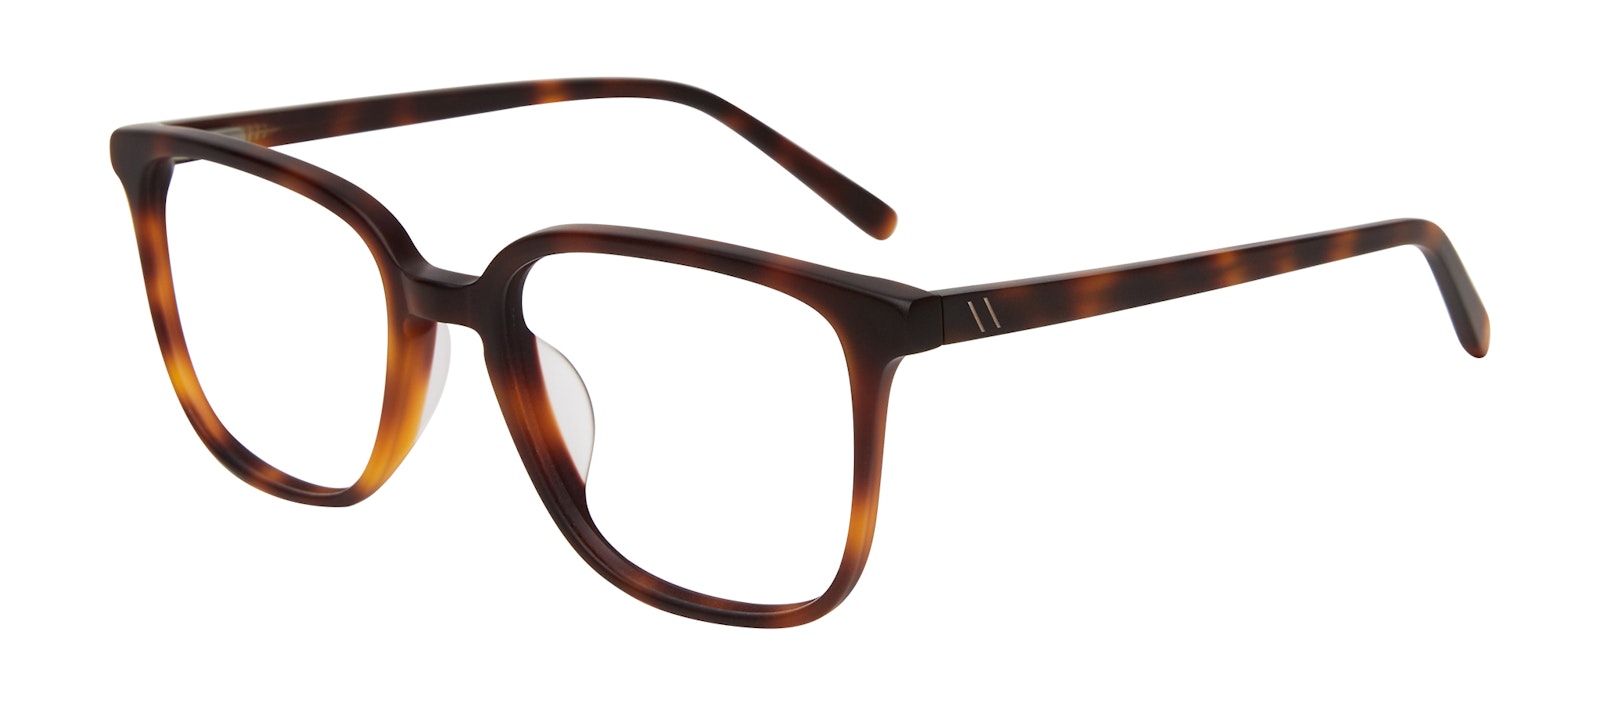 Men's Eyeglasses - Fellow in Matte Tortoise | BonLook